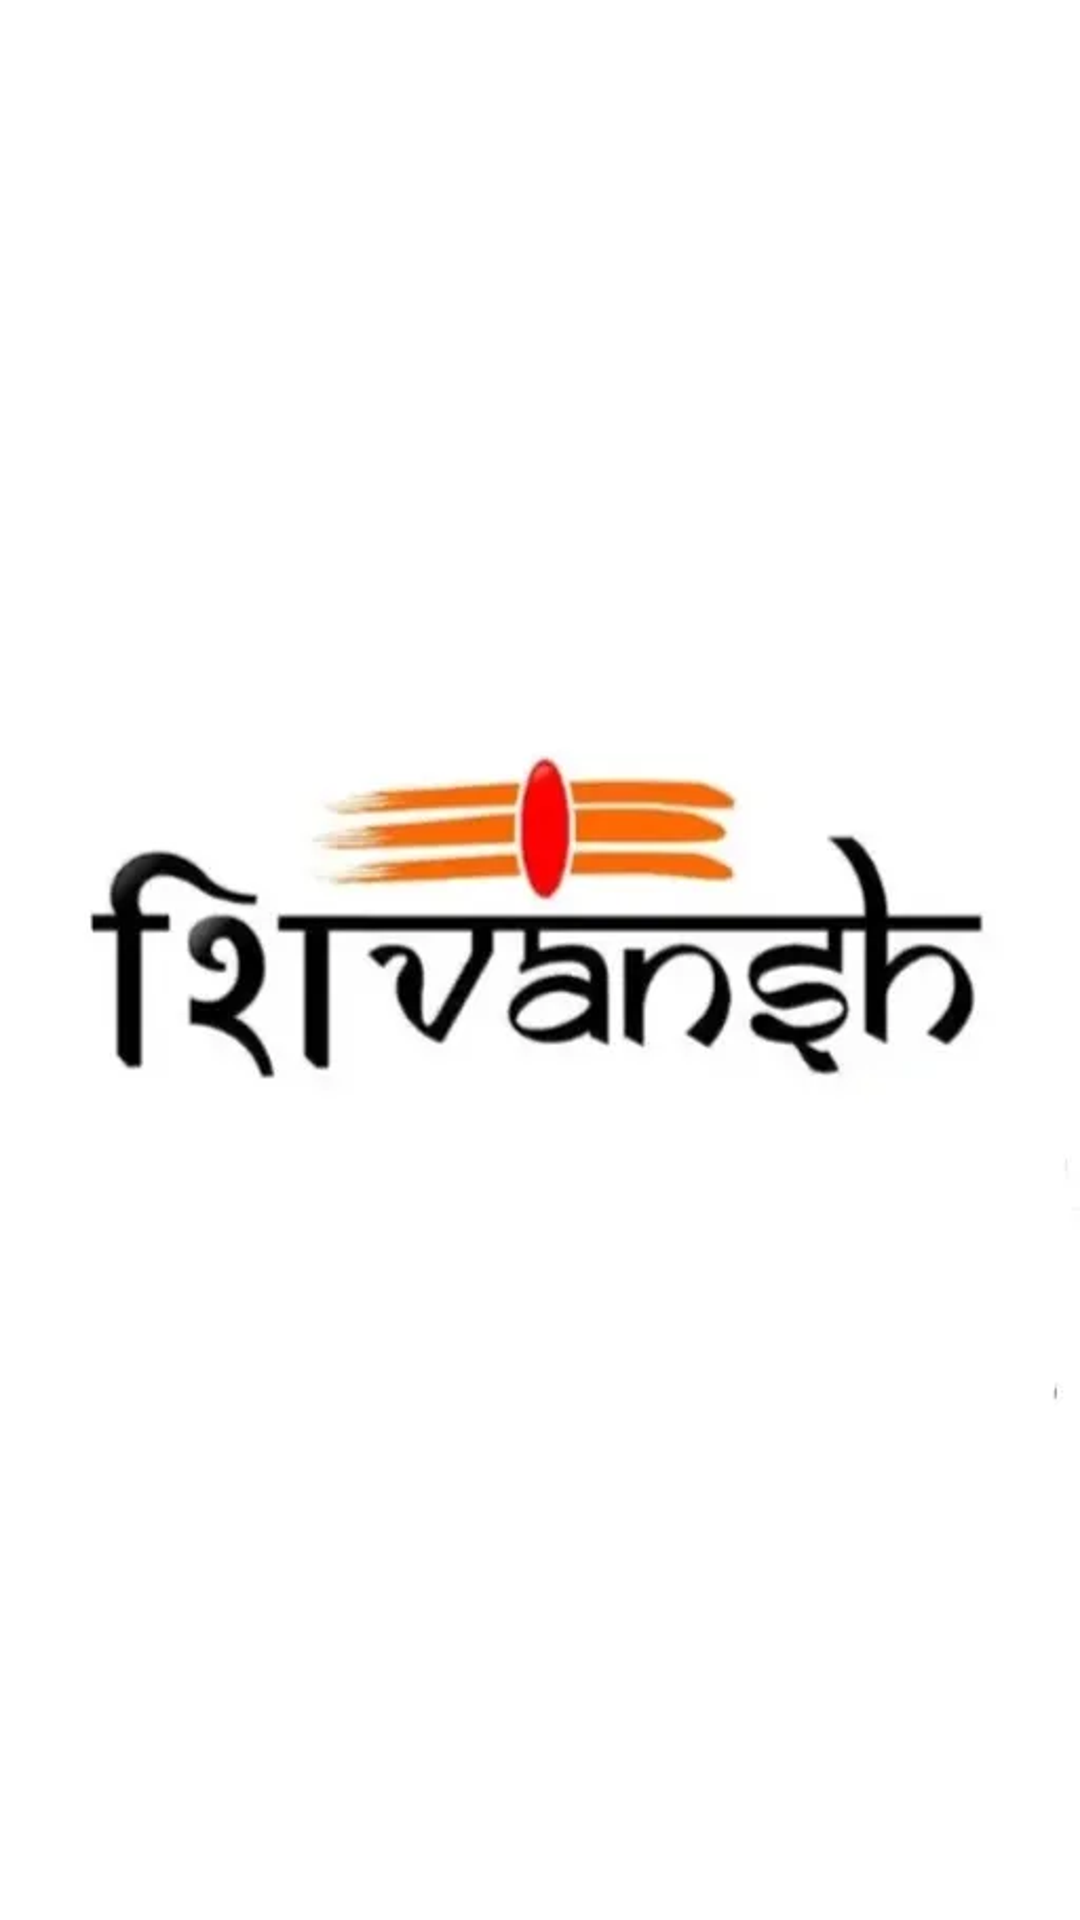 Shivansh name logo brand comment your next neme #shortsfeed #art  #shortsviral - YouTube